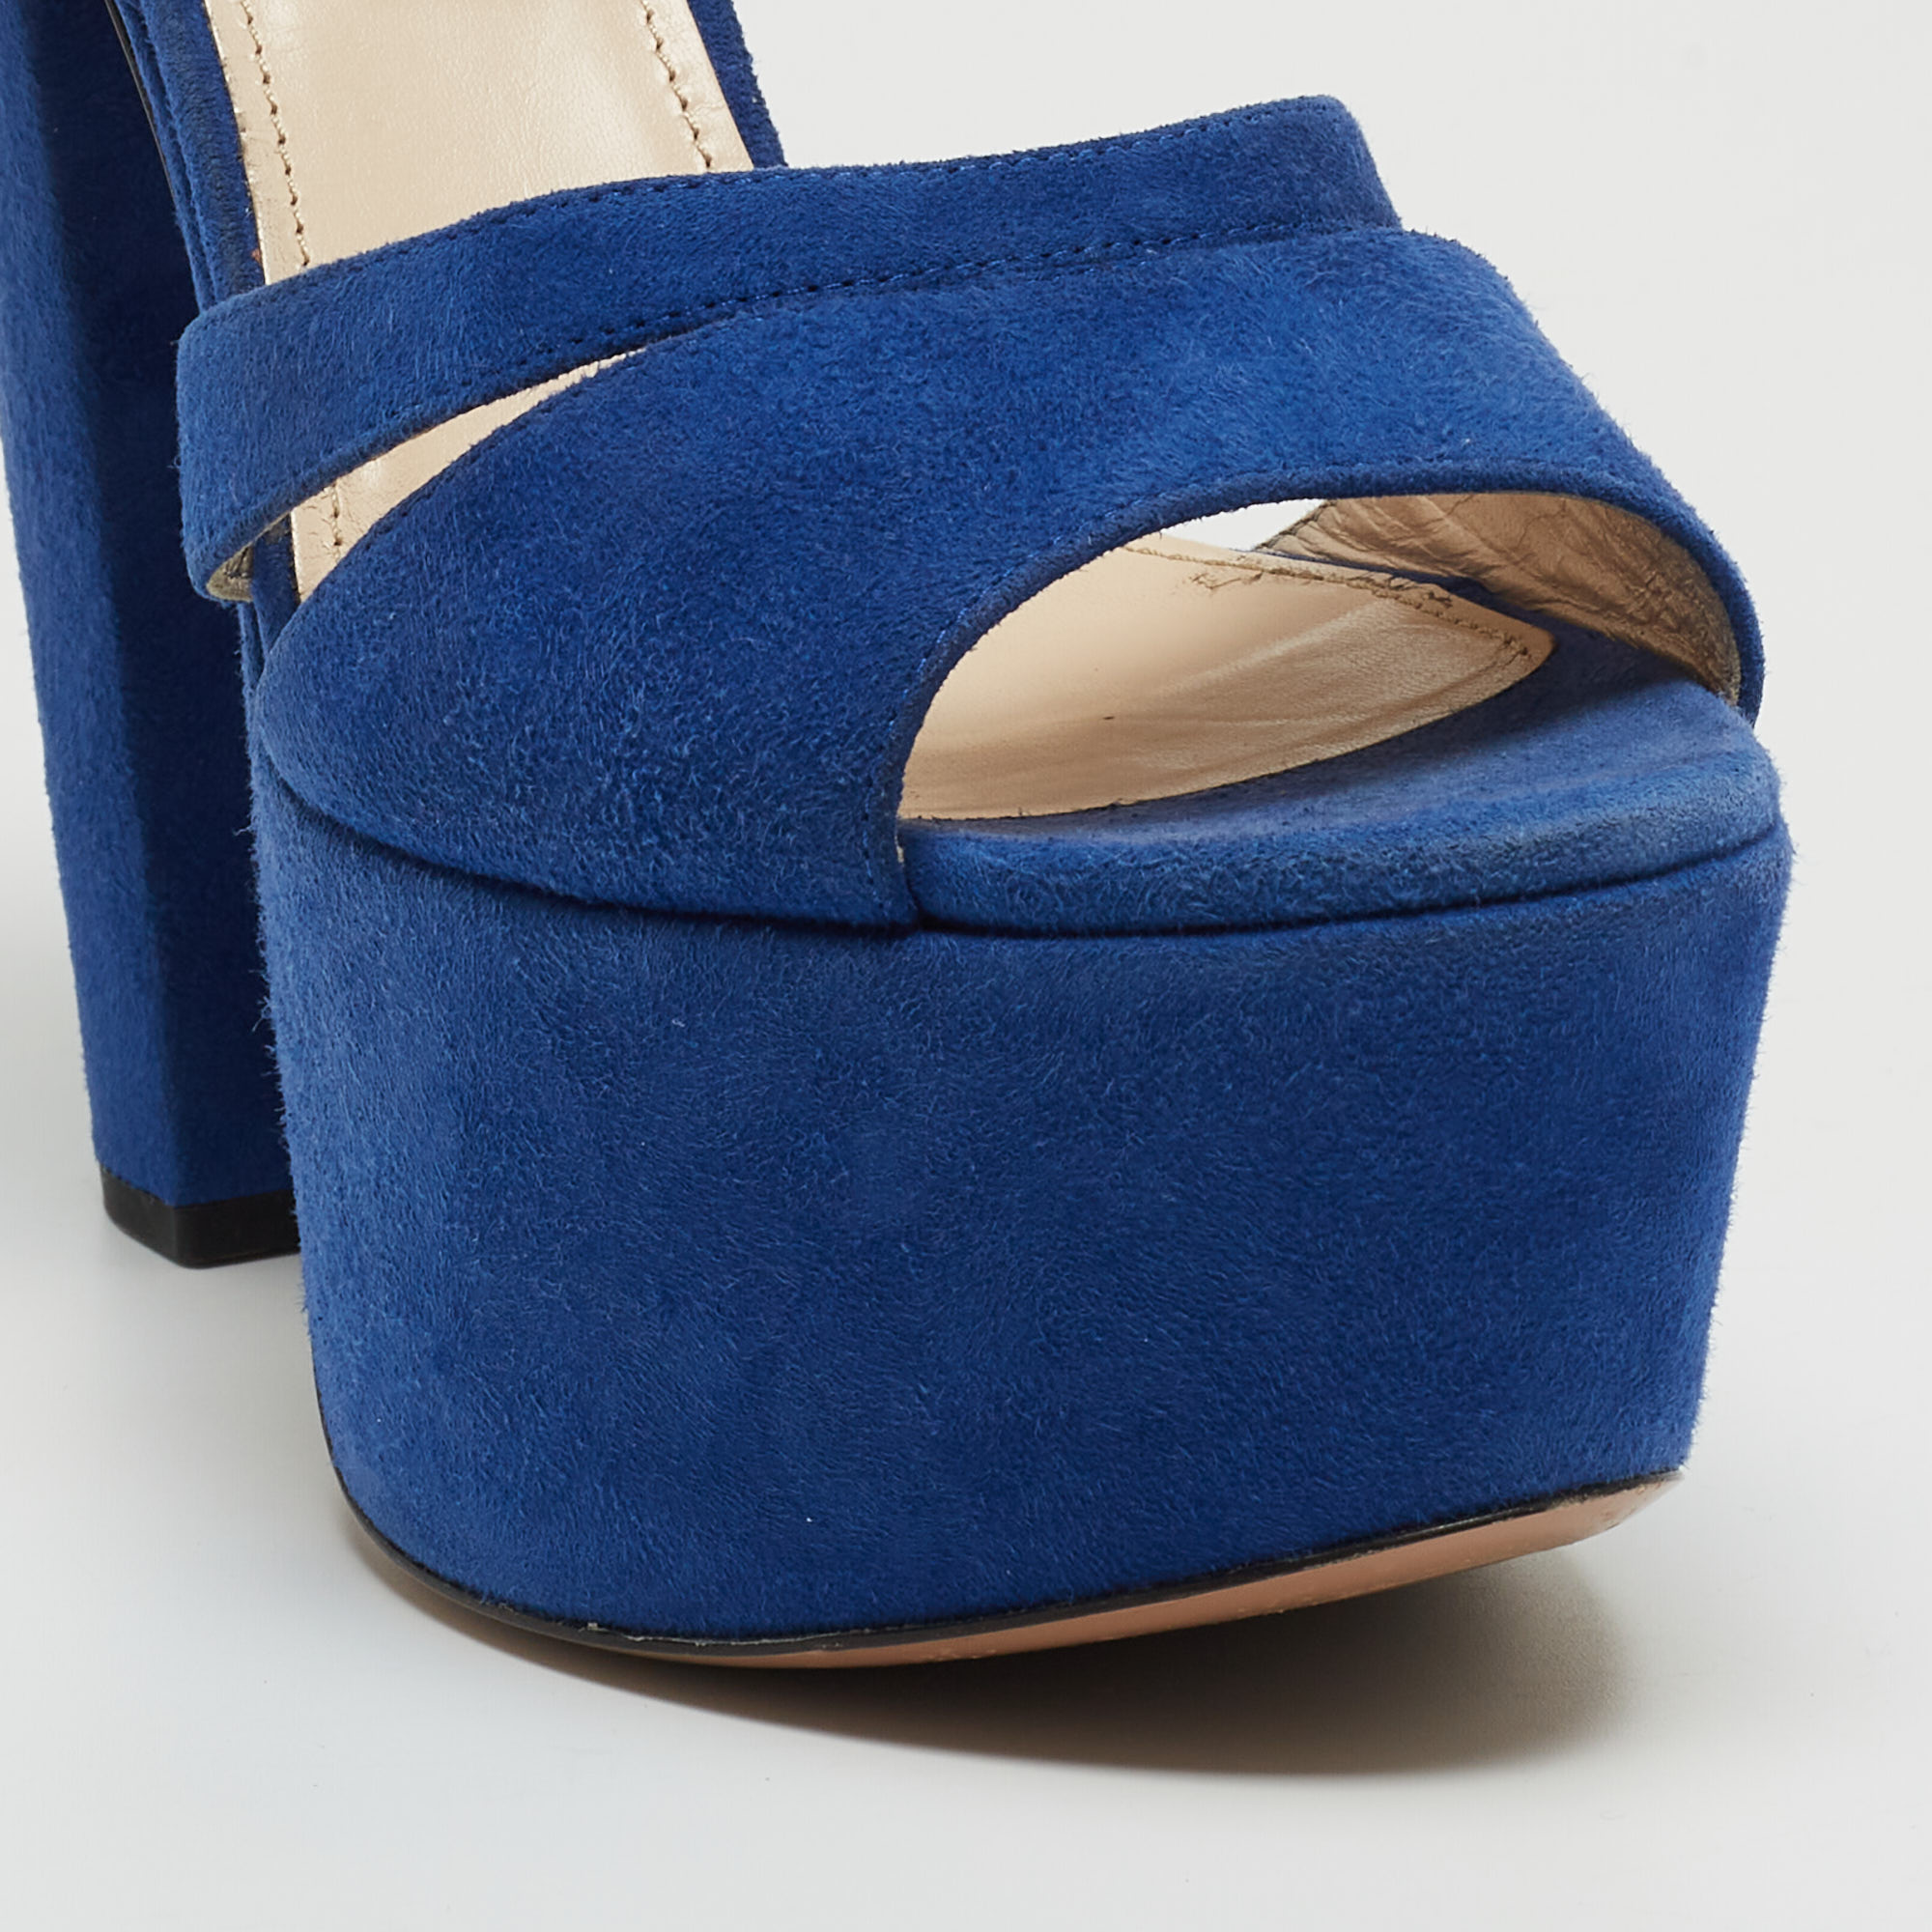 Prada Blue Suede Block Heel Platform Ankle Strap Sandals Size 38.5